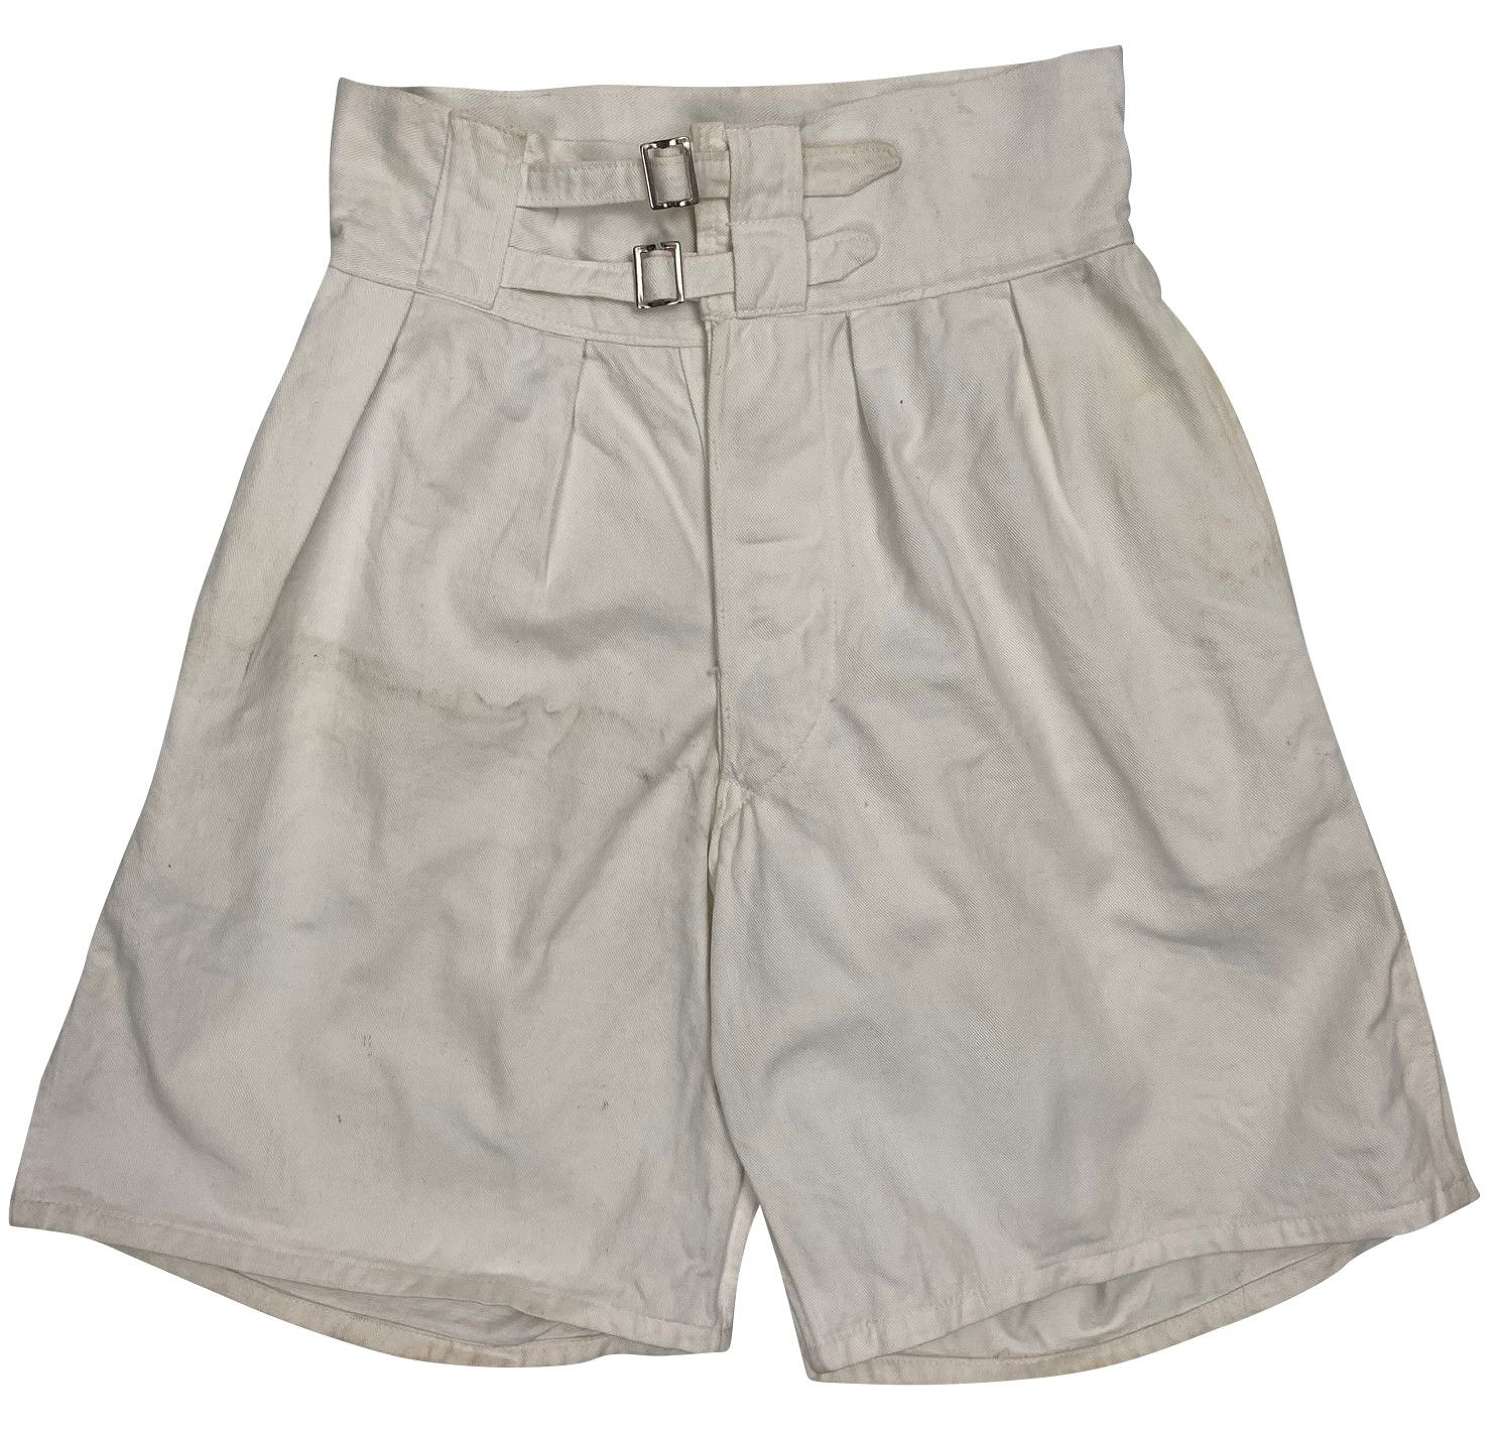 Original 1940s White Royal Navy Shorts